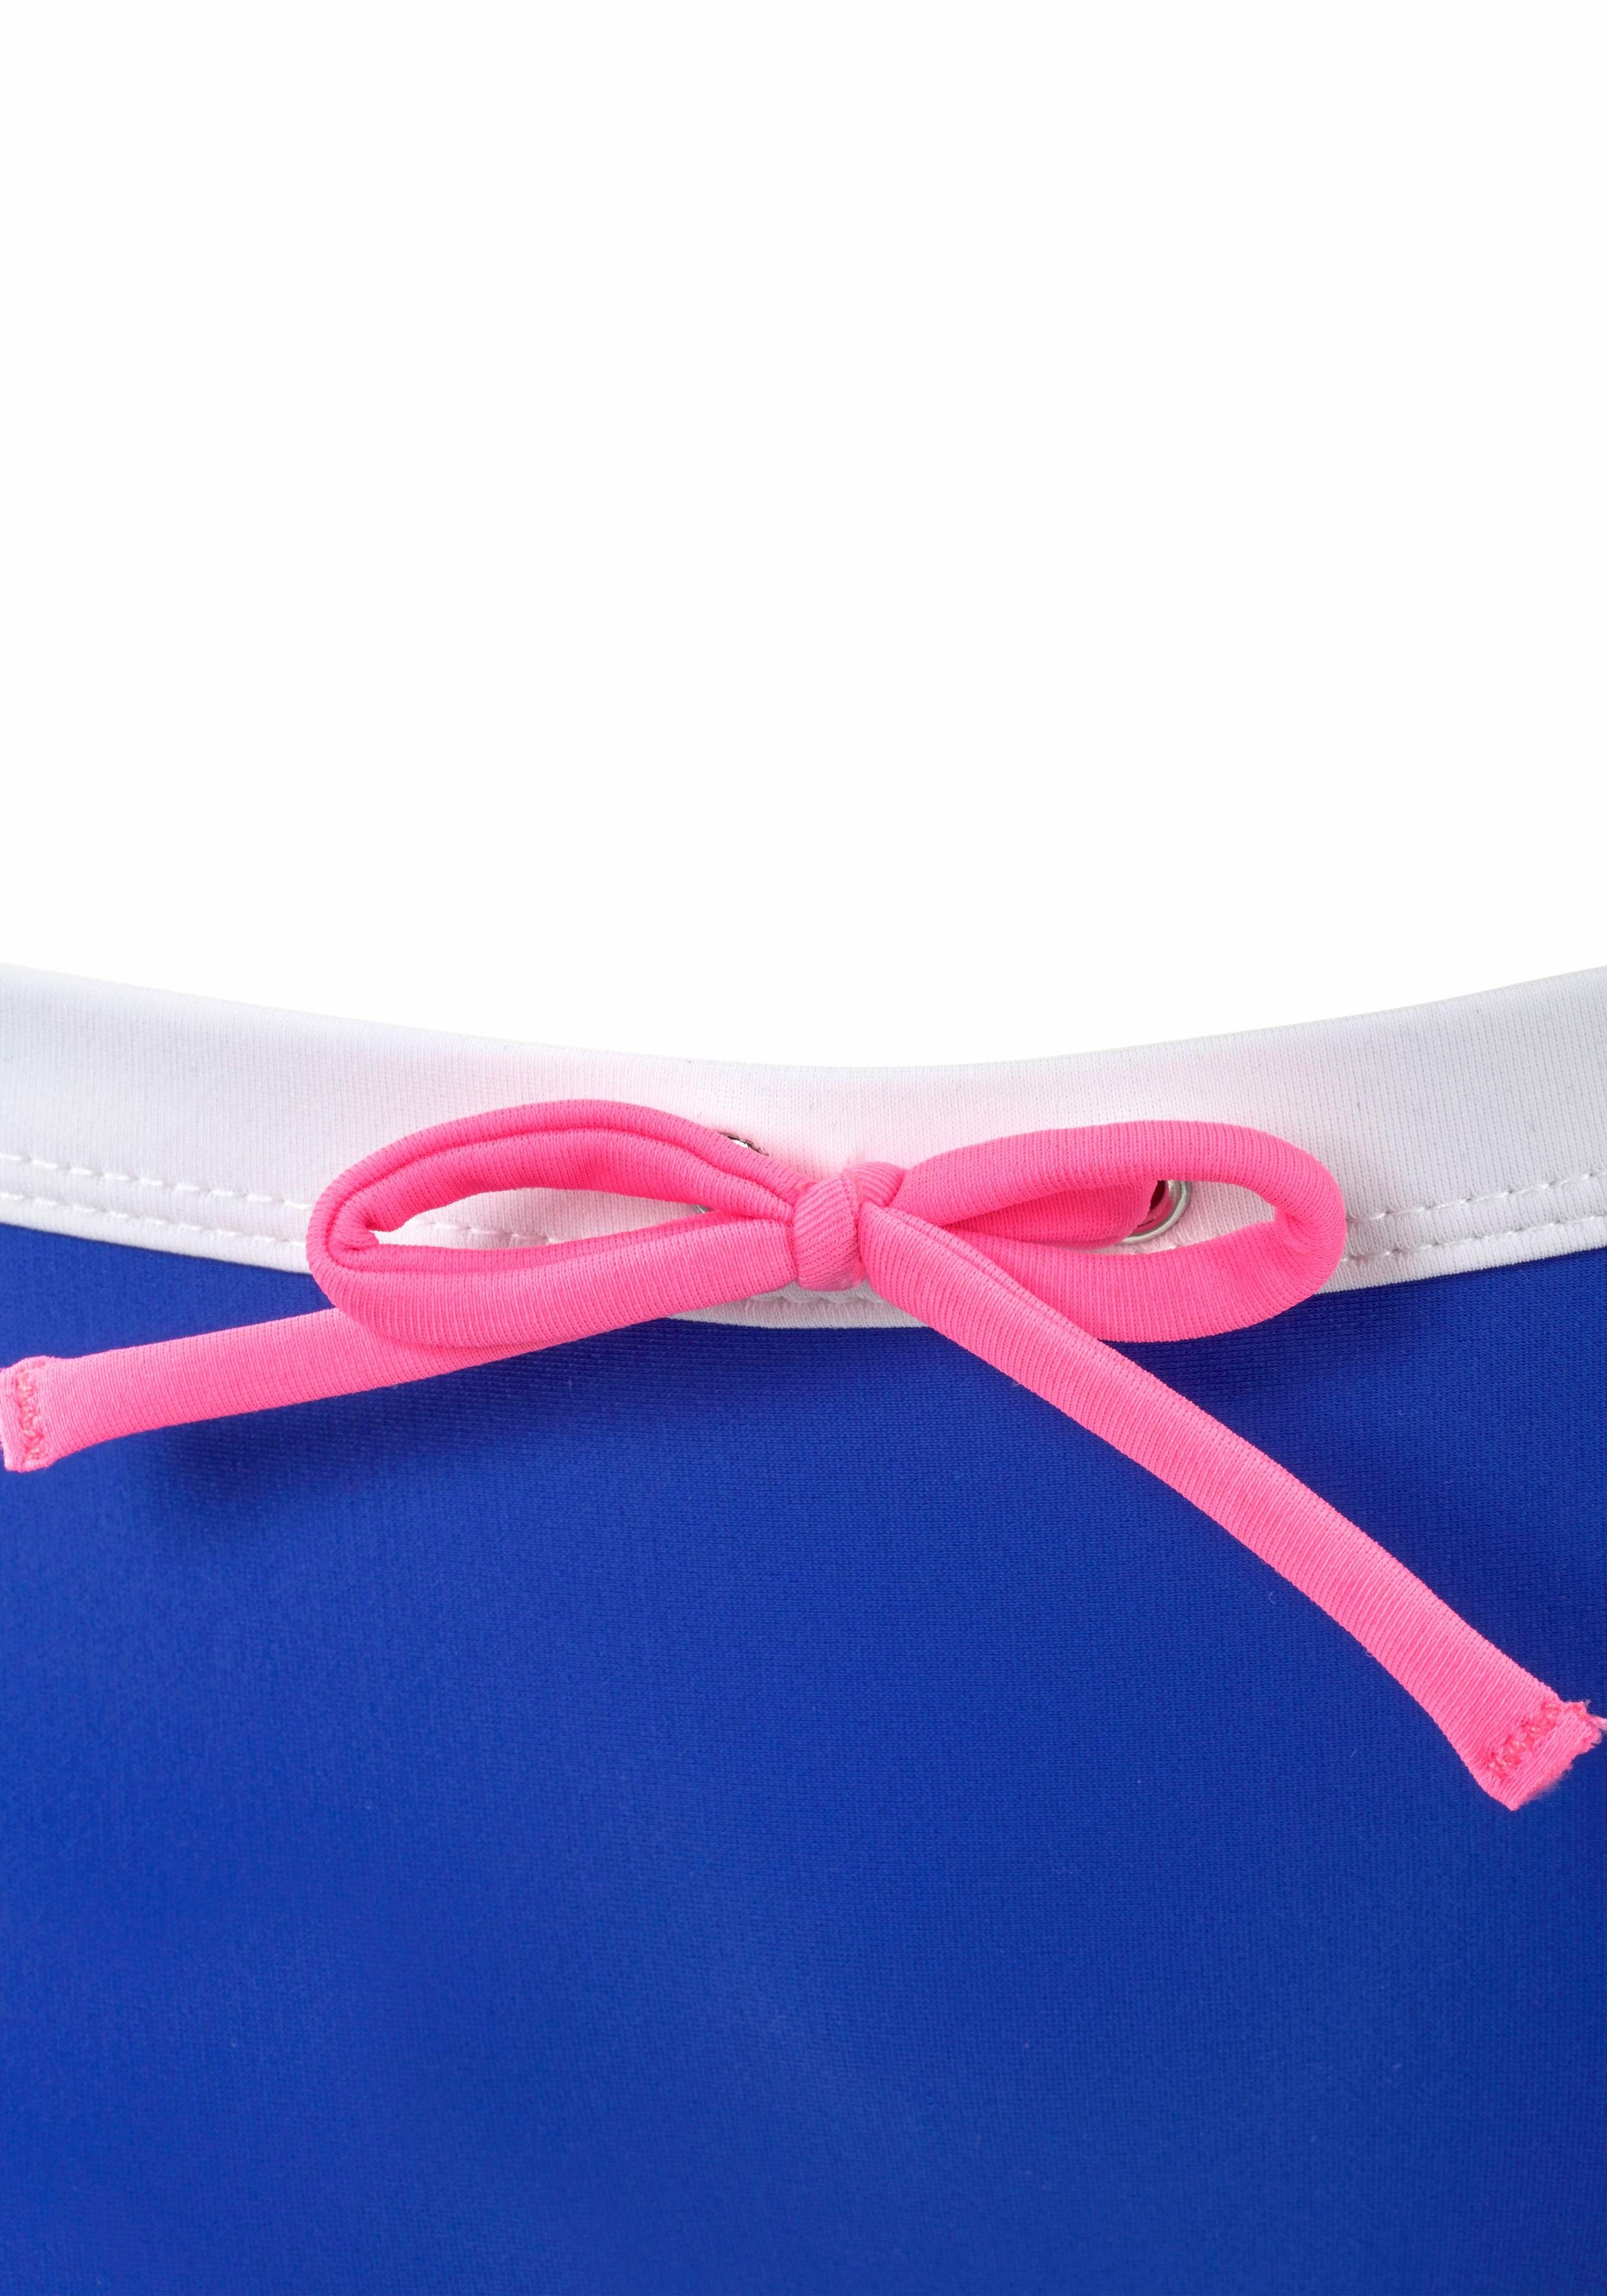 Bustier-Bikini Bench. blau-pink mit Kontrastdetails